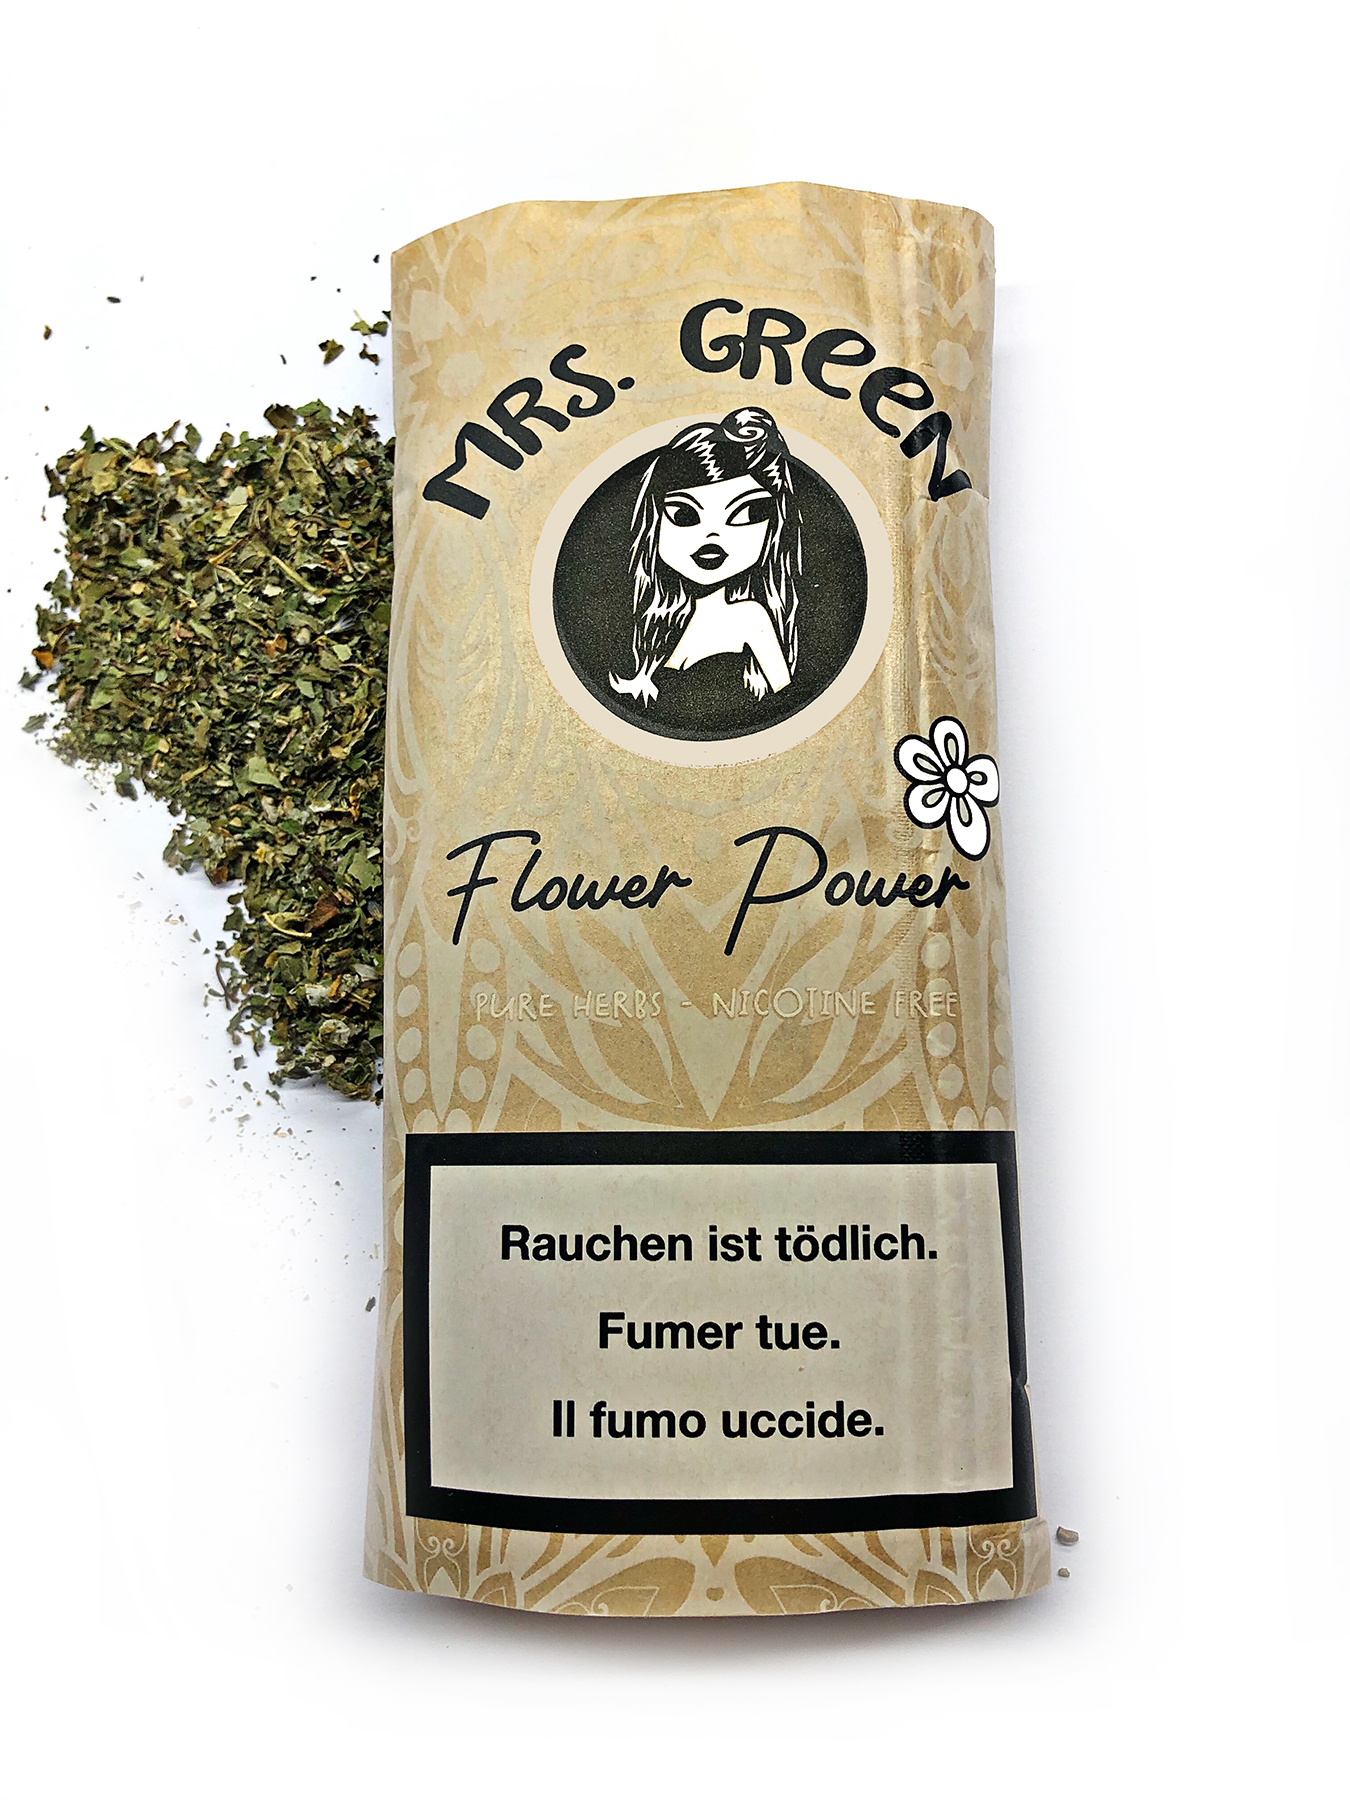 Frau Grün - Mélange d'herbes Flower Power 80g (100% sans nicotine et naturel)